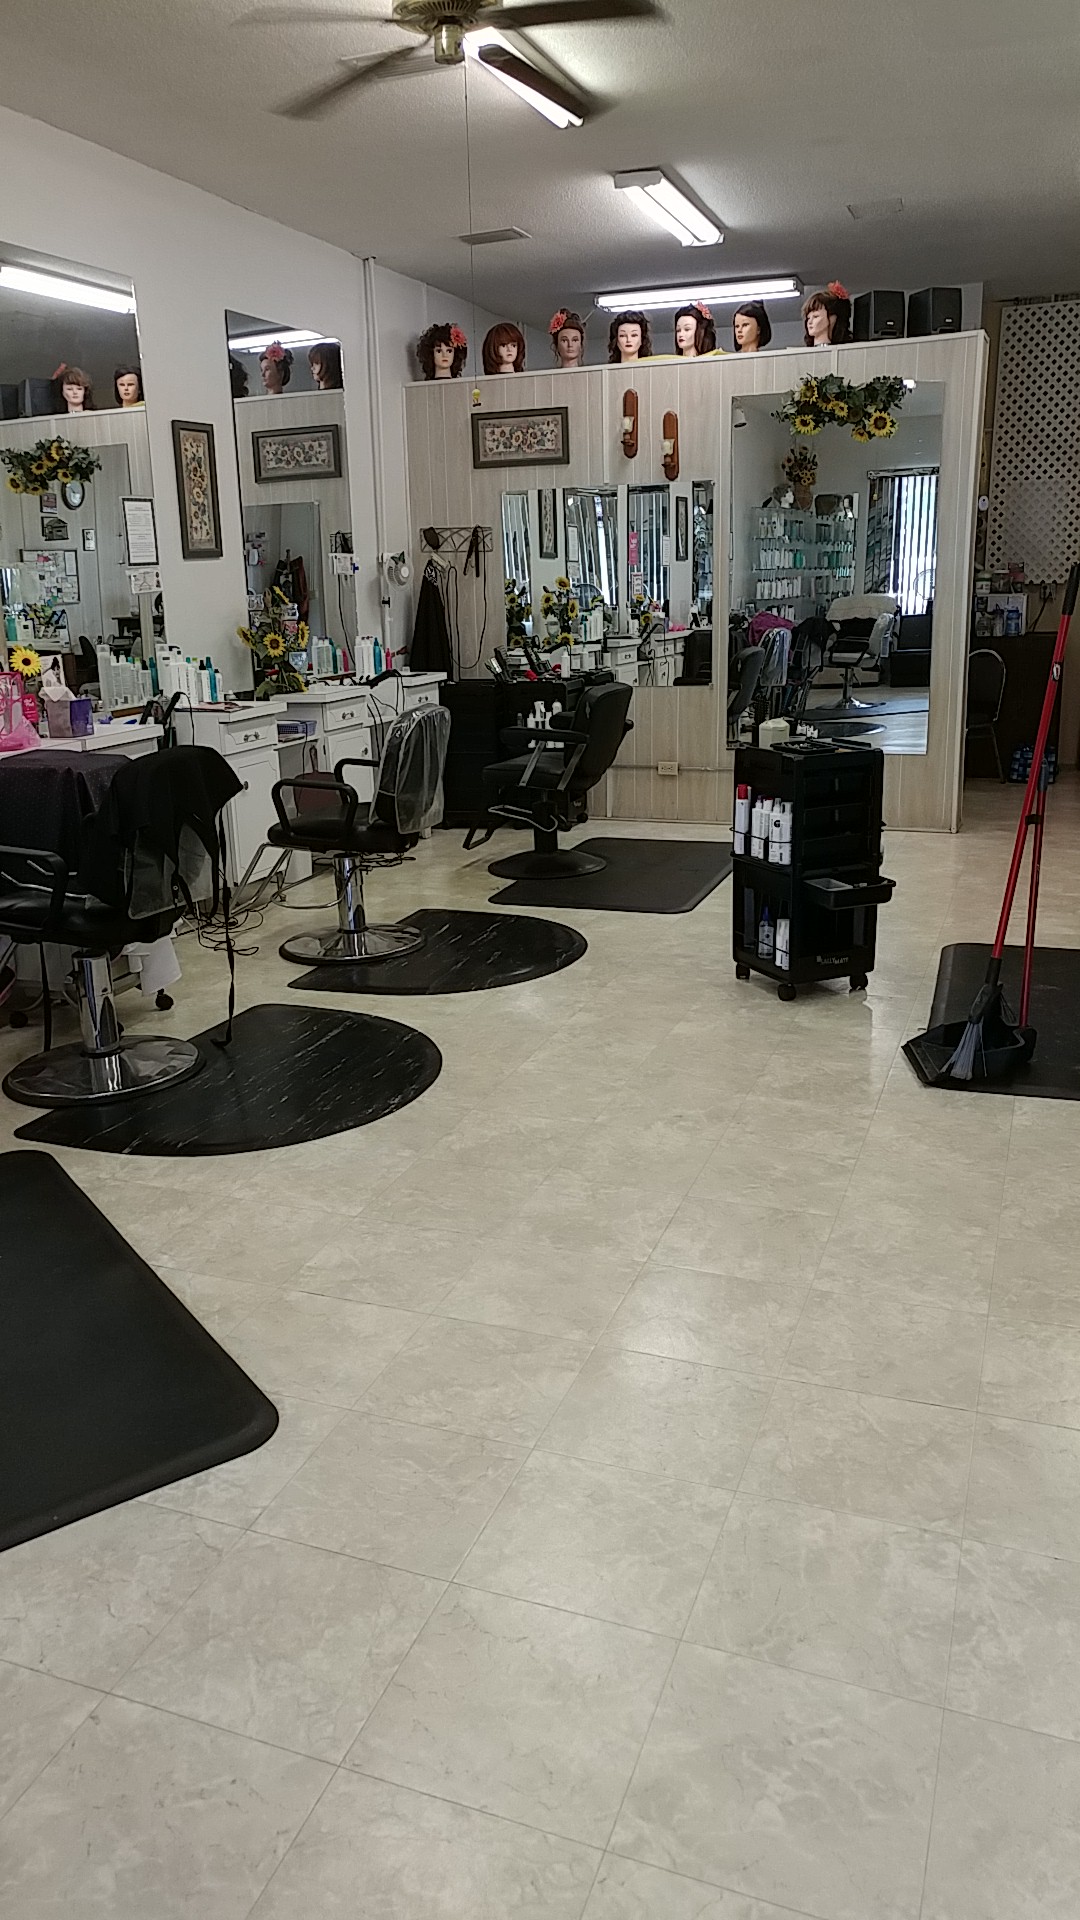 Sherry's Beauty Salon 14379 FL-40, Silver Springs Florida 34488